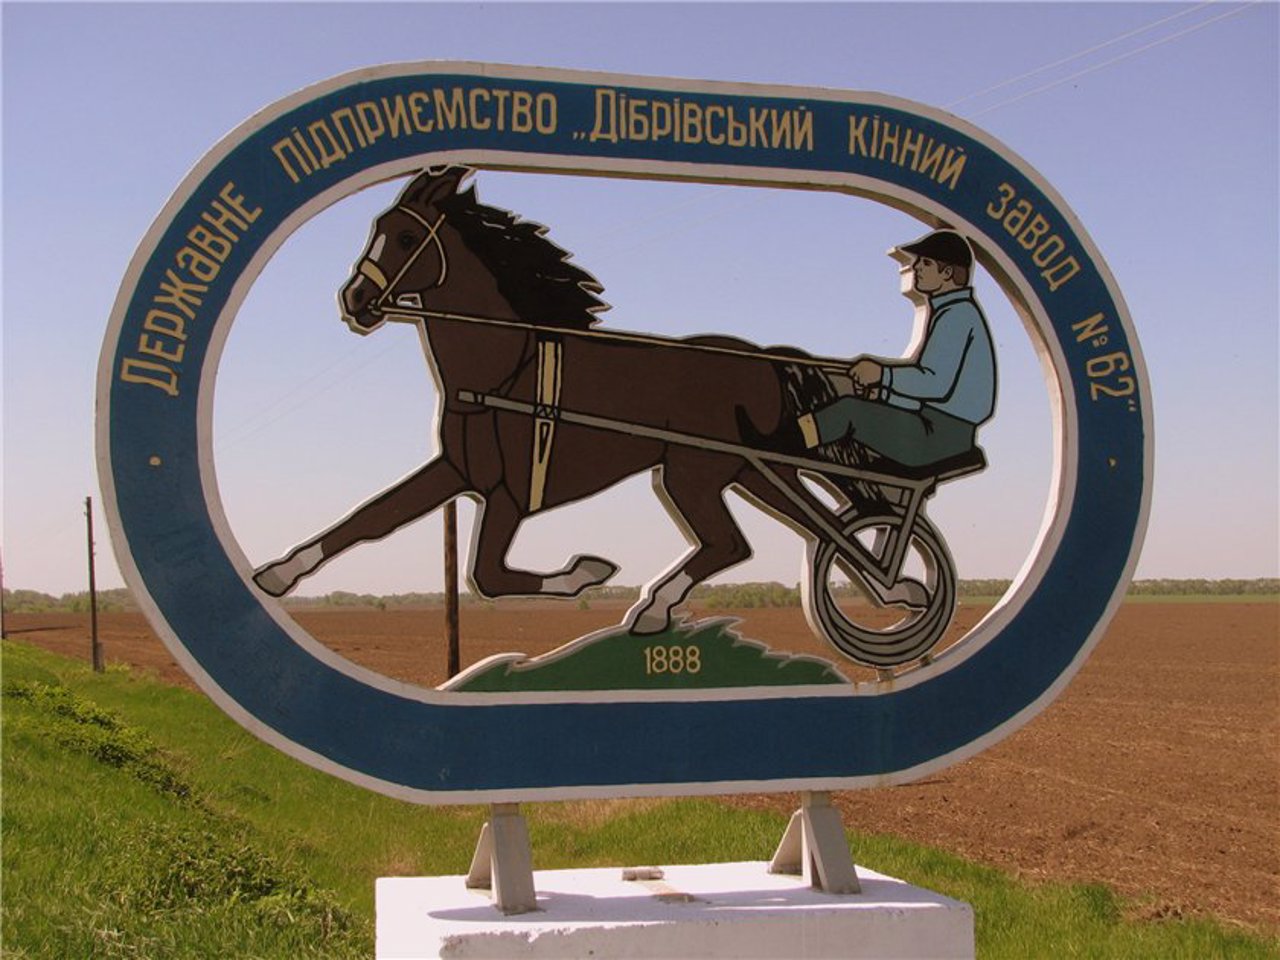 Dibrivka Horse Farm